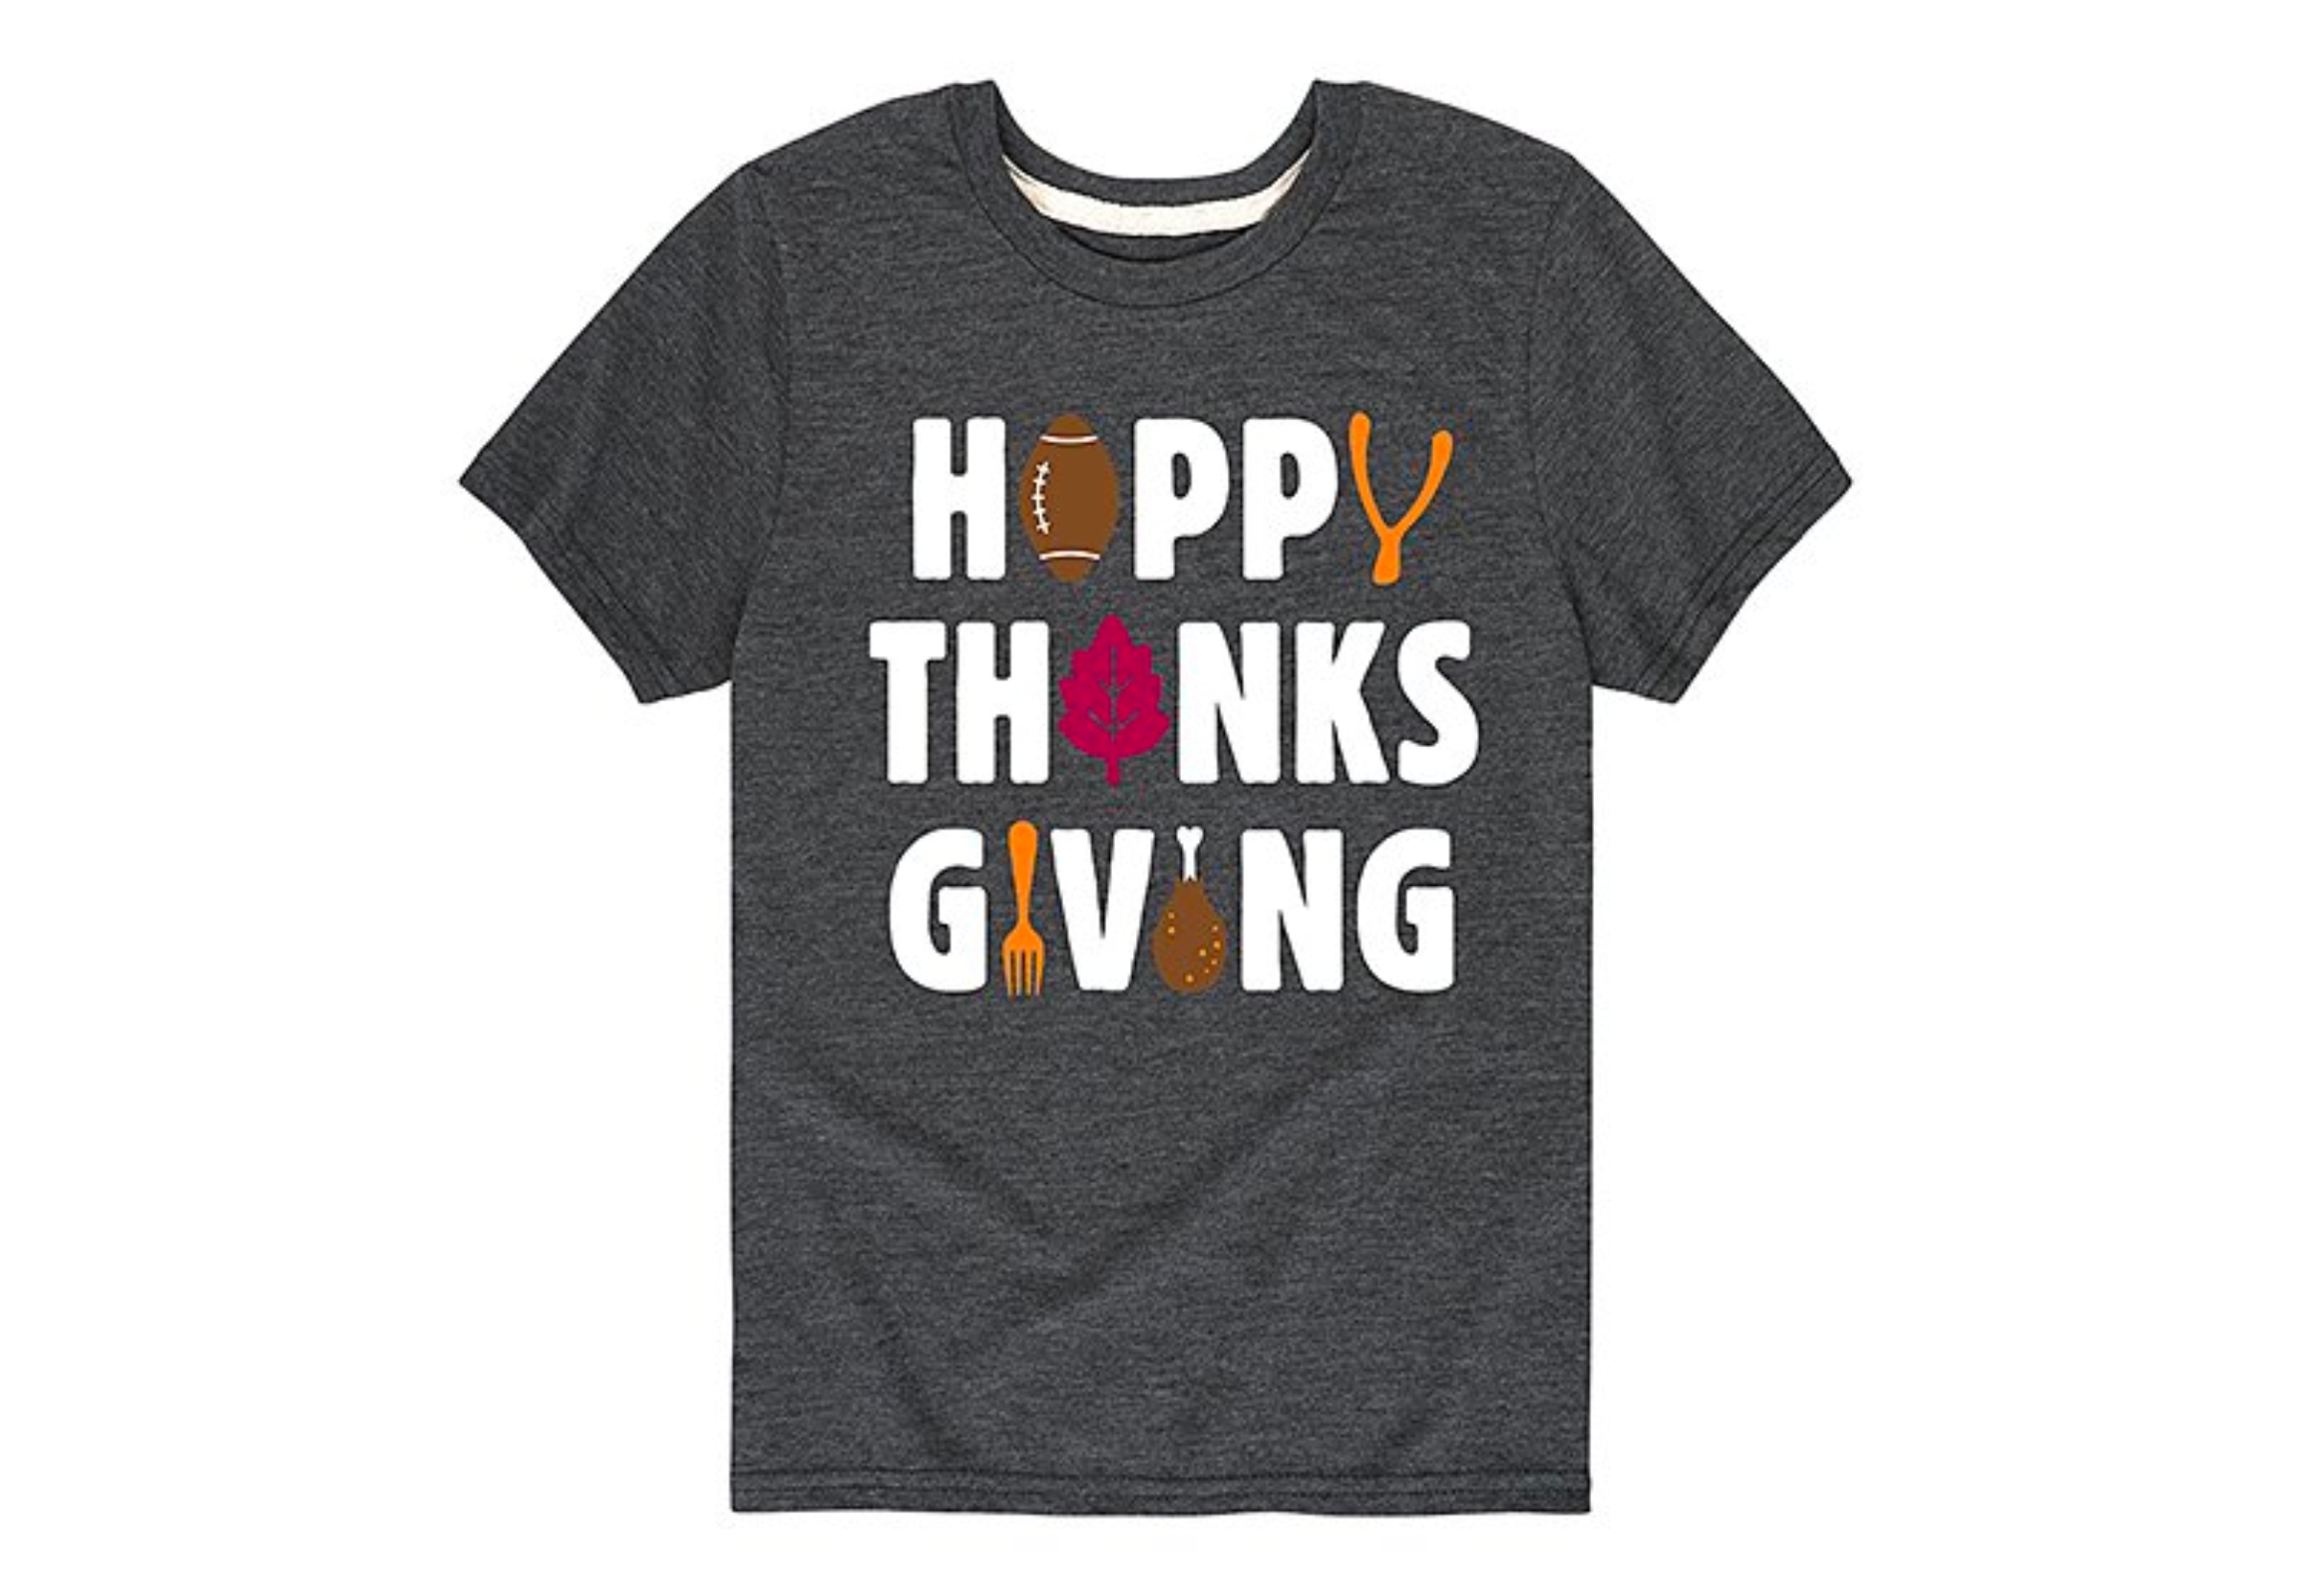 Kids' Thanksgiving T-shirt